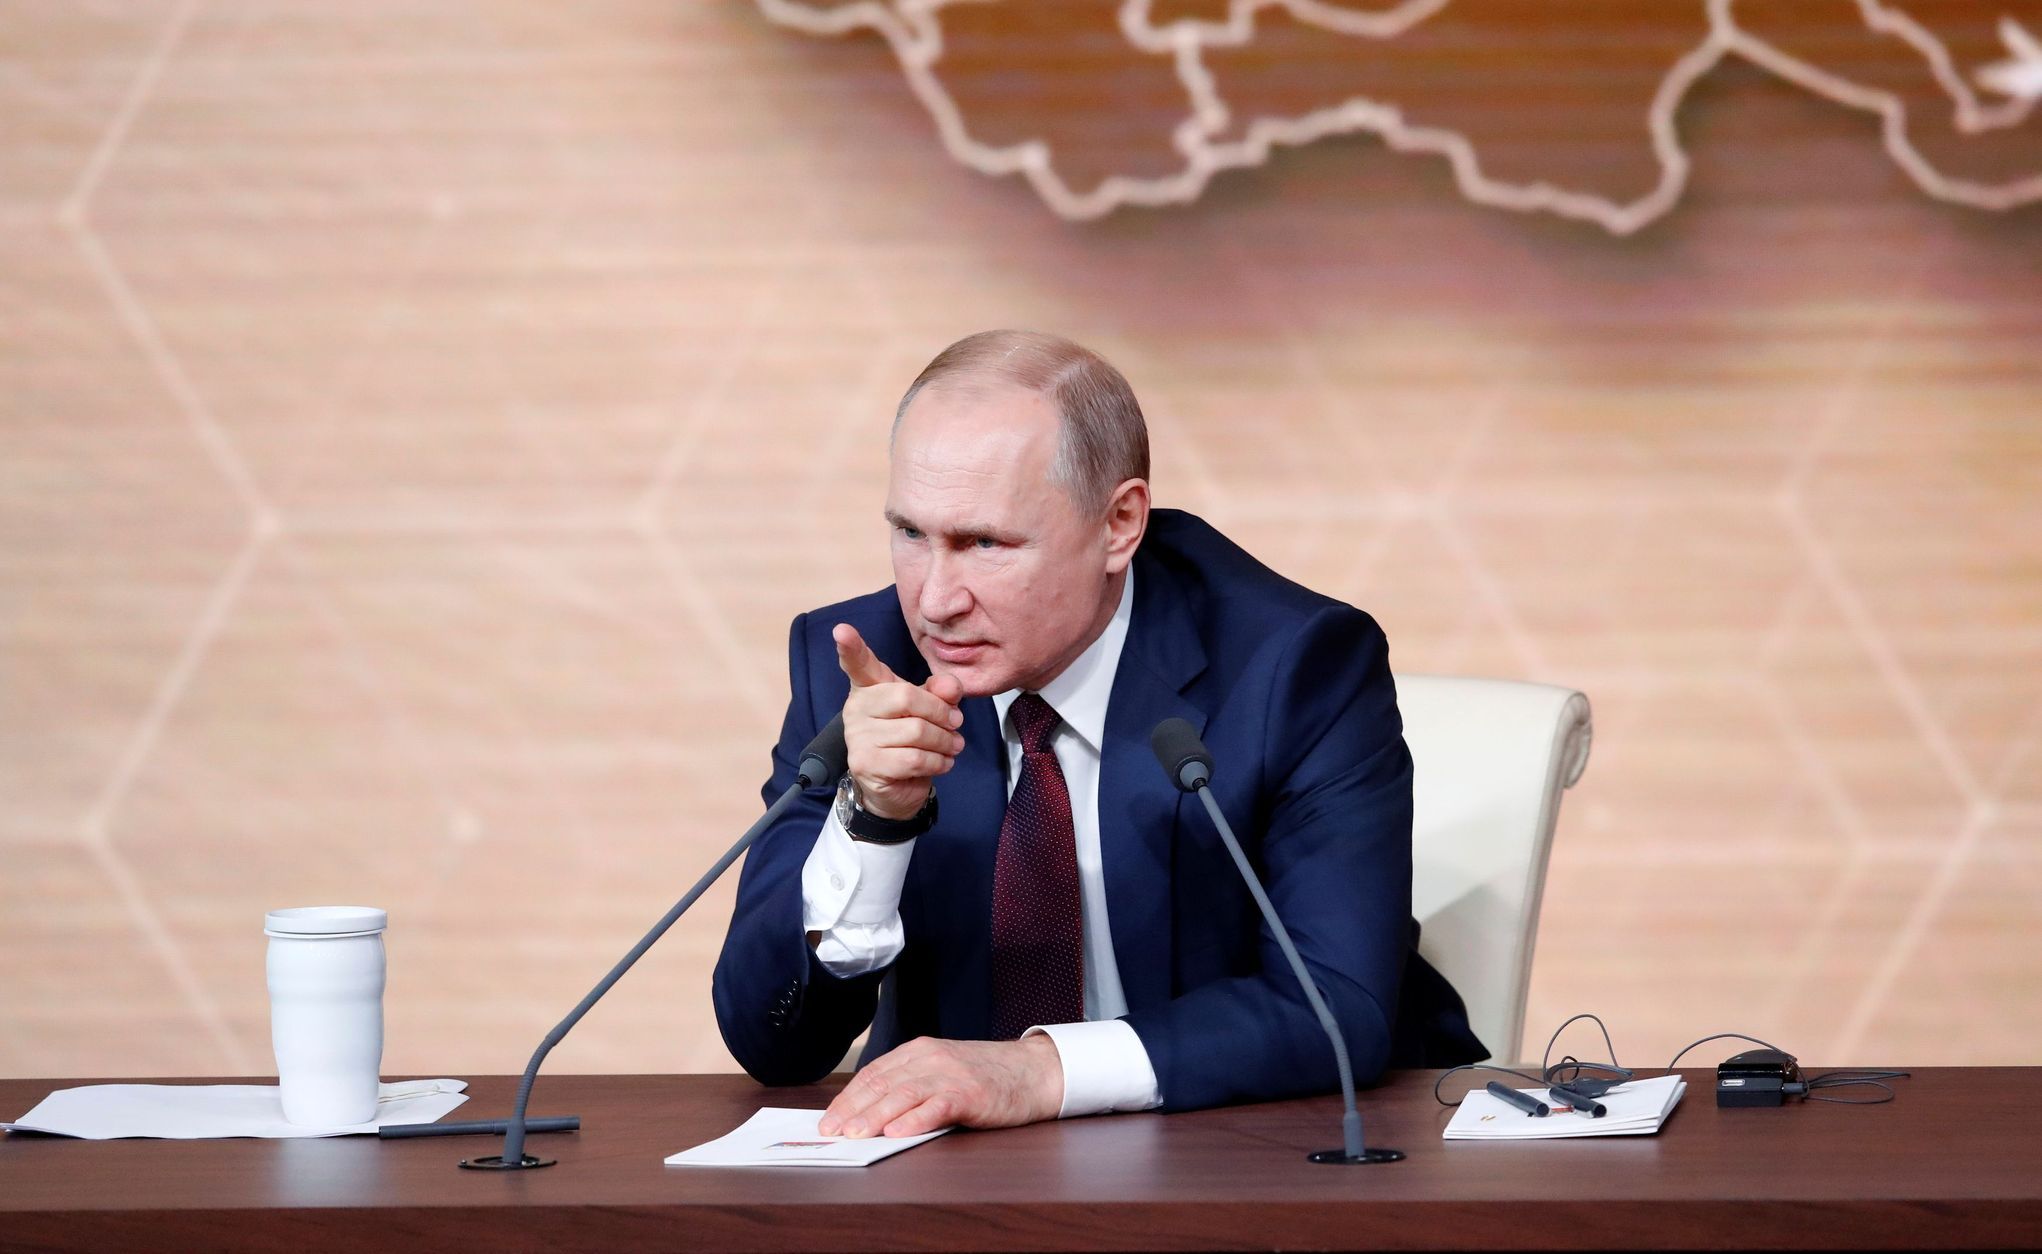 Penalty for doping?  Unfair decisions that go against common sense, make Putin thunder